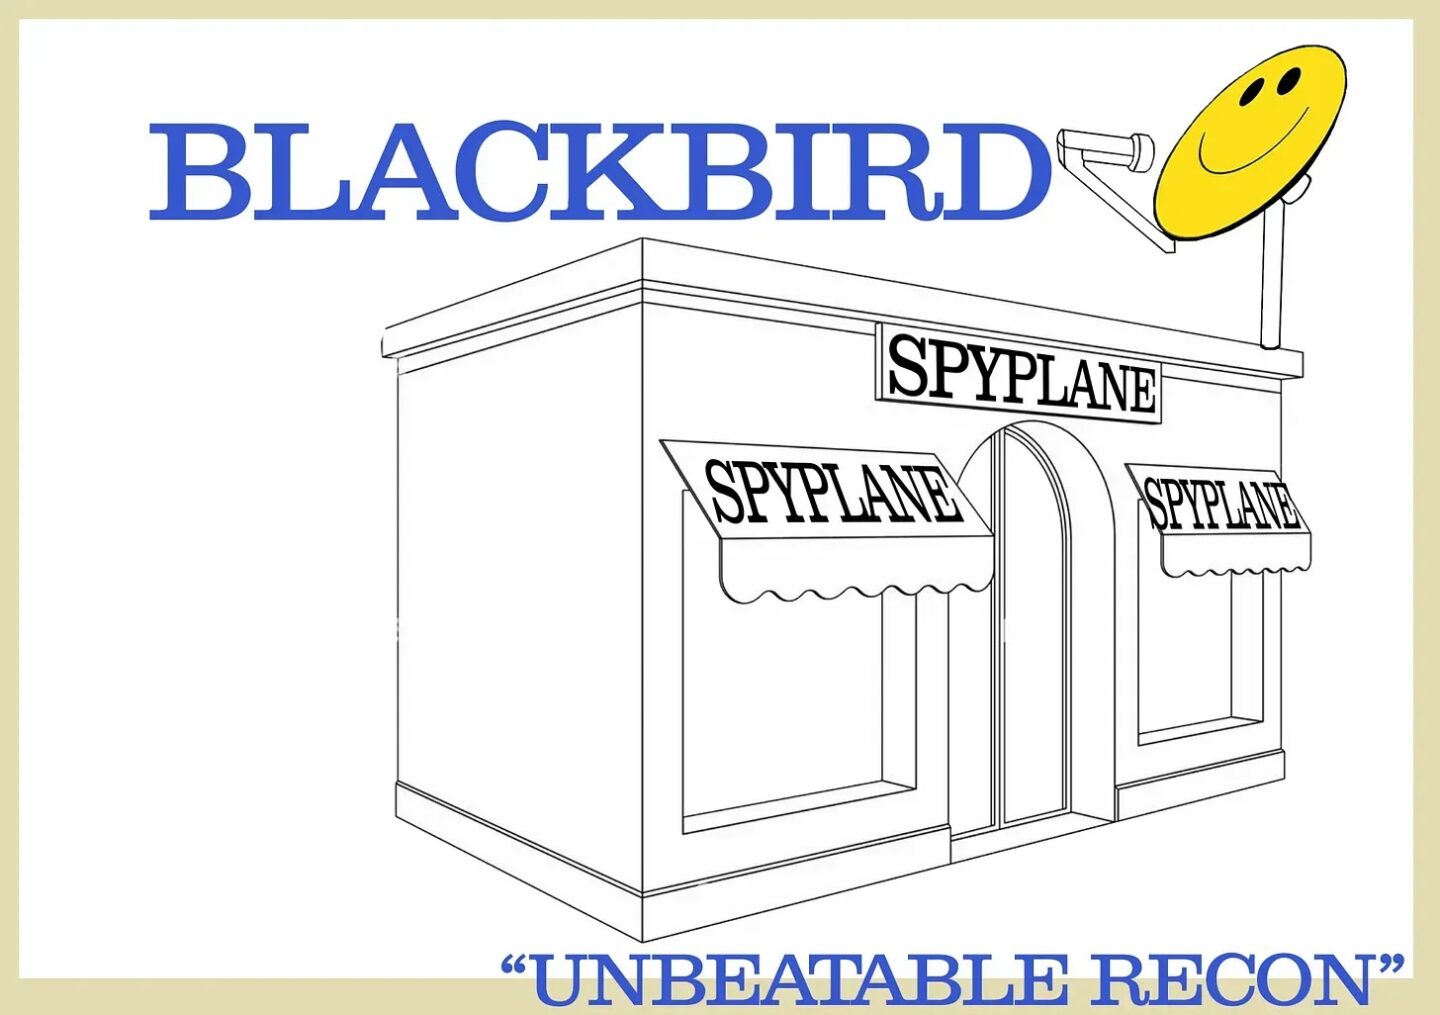 Blackbirdspyplane fashion menswear